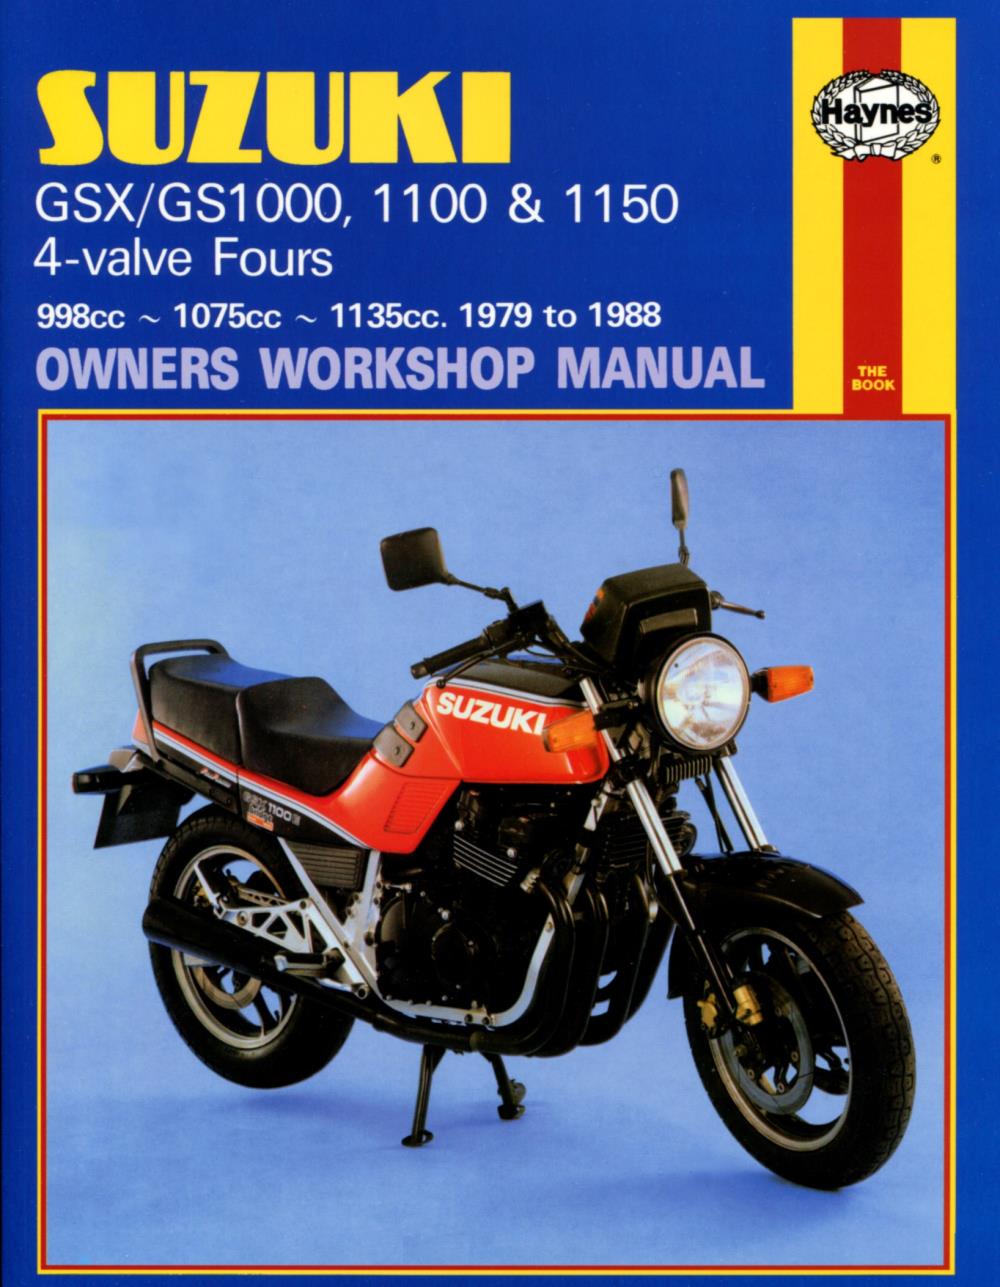 Manual Haynes for 1982 Suzuki GSX 1100 EZ (16 Valve 